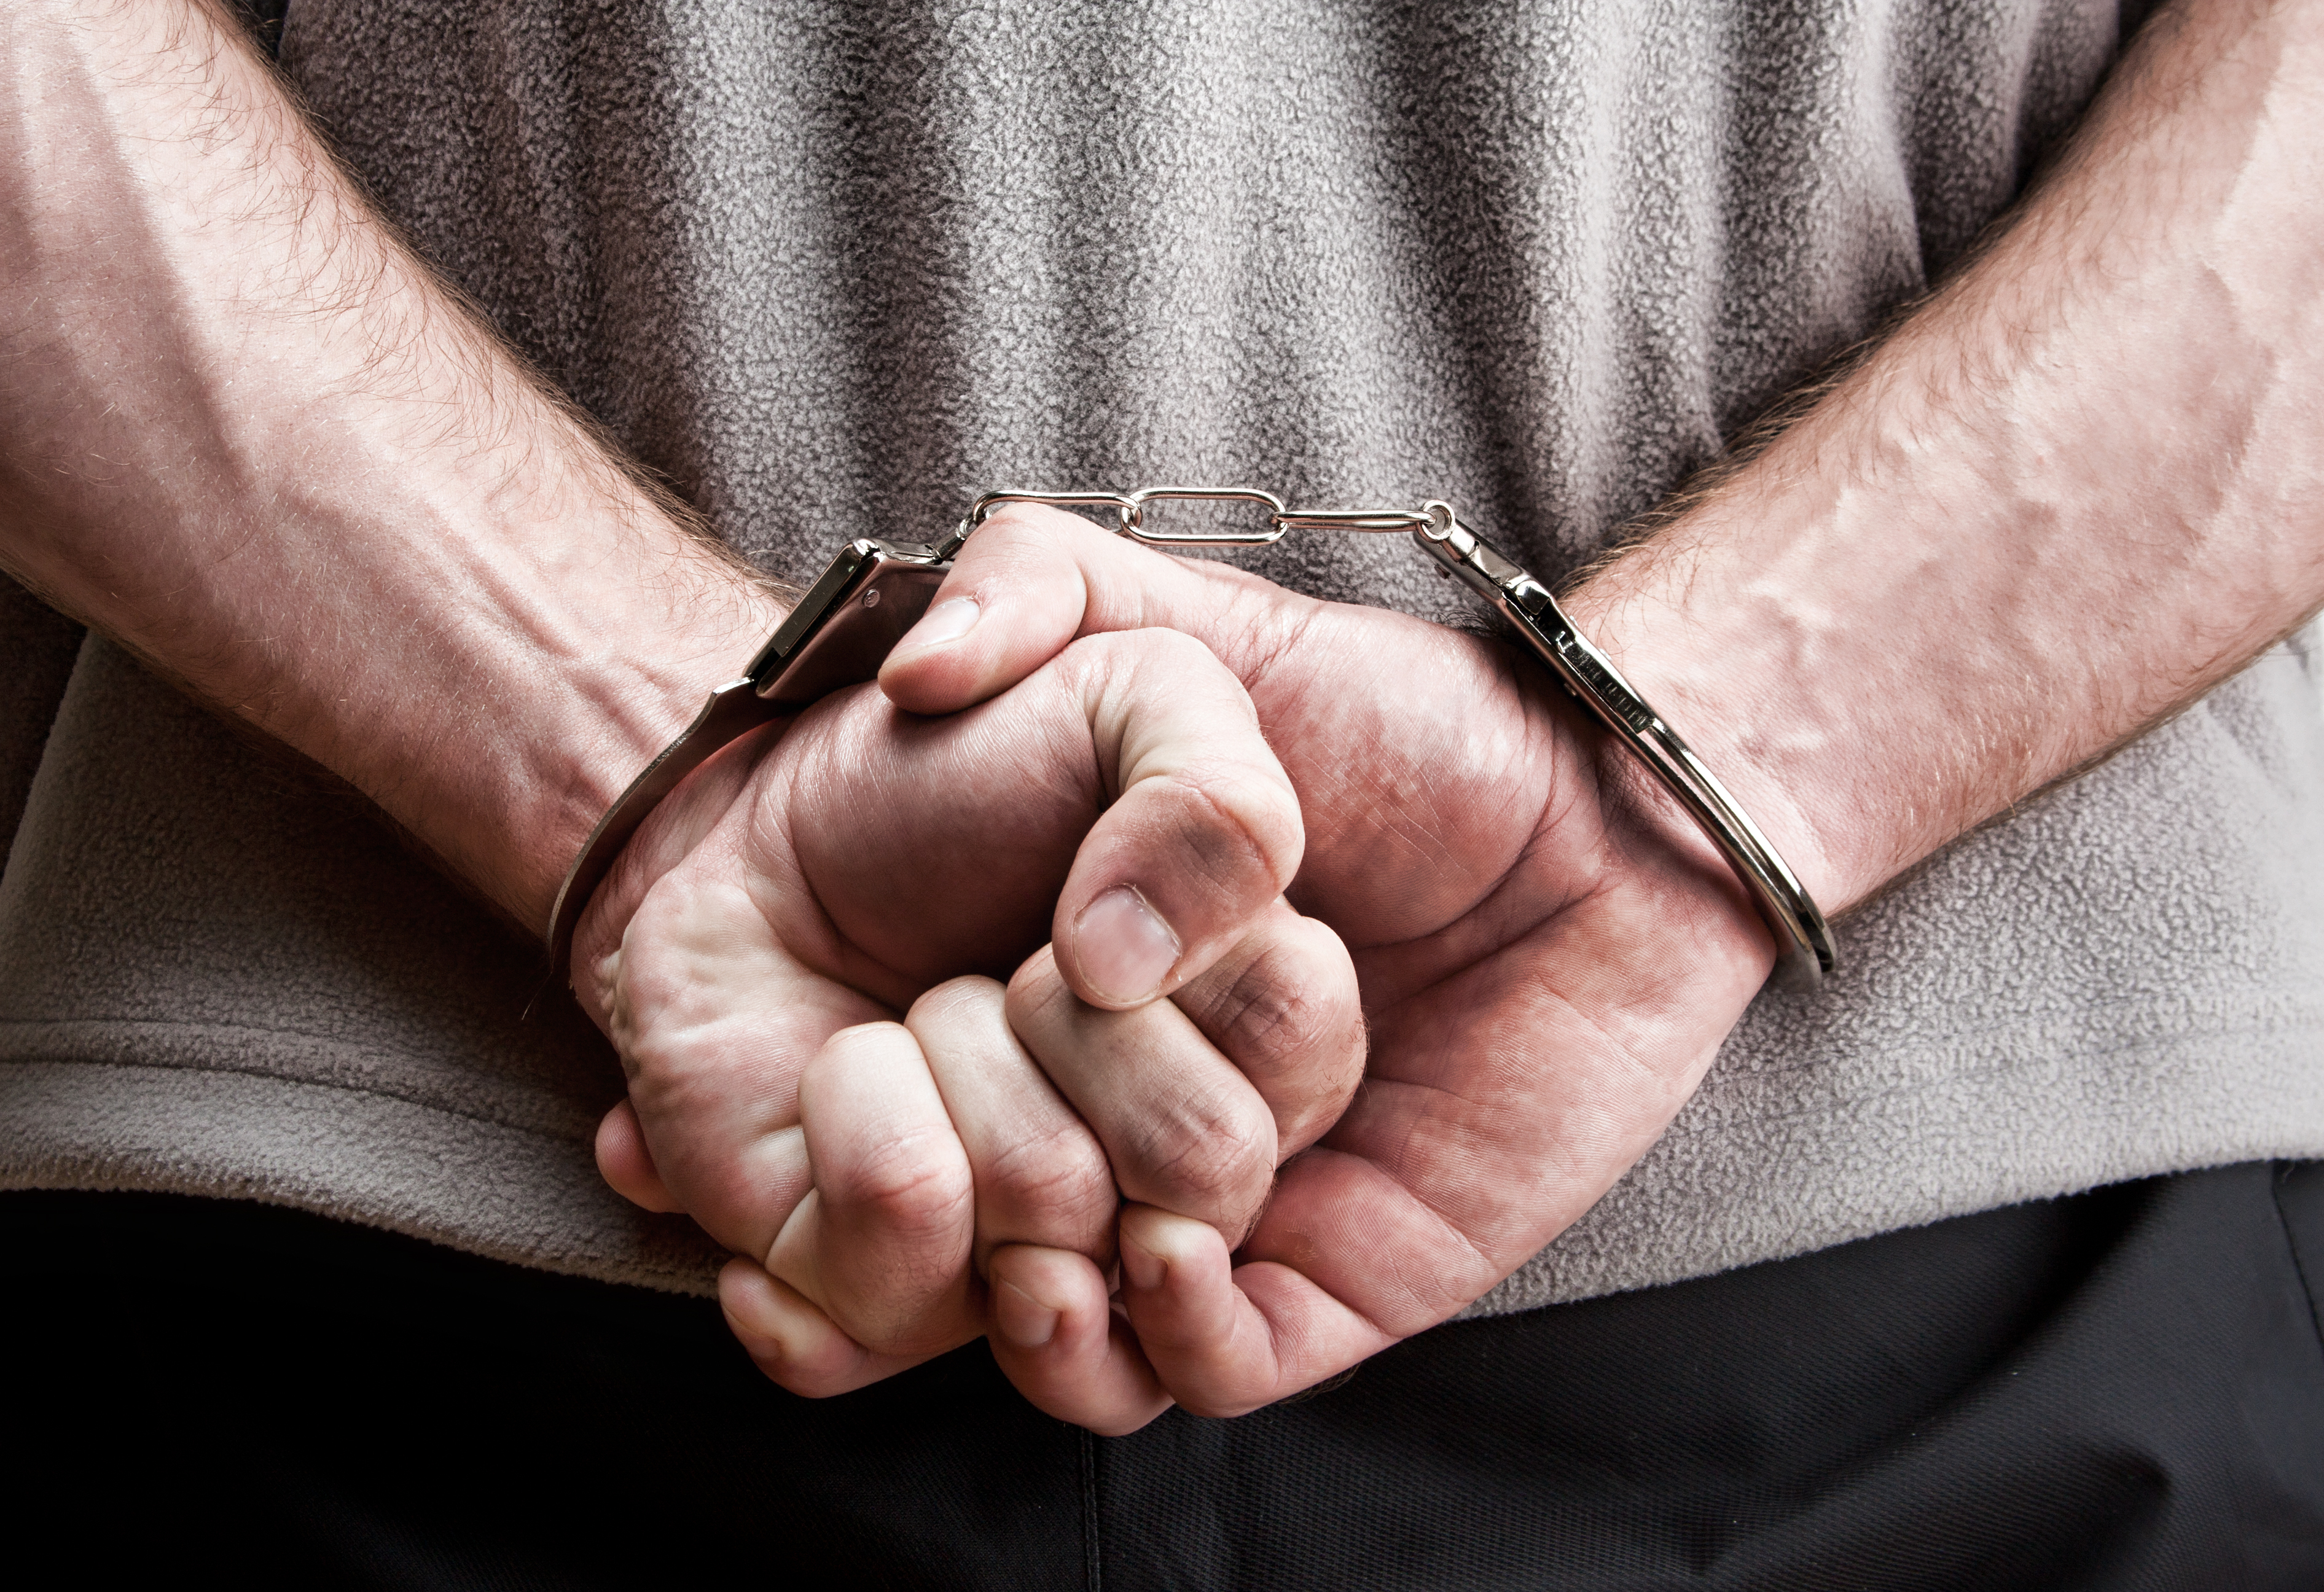 Close-up of a man's handcuffed hands | Source: Shutterstock